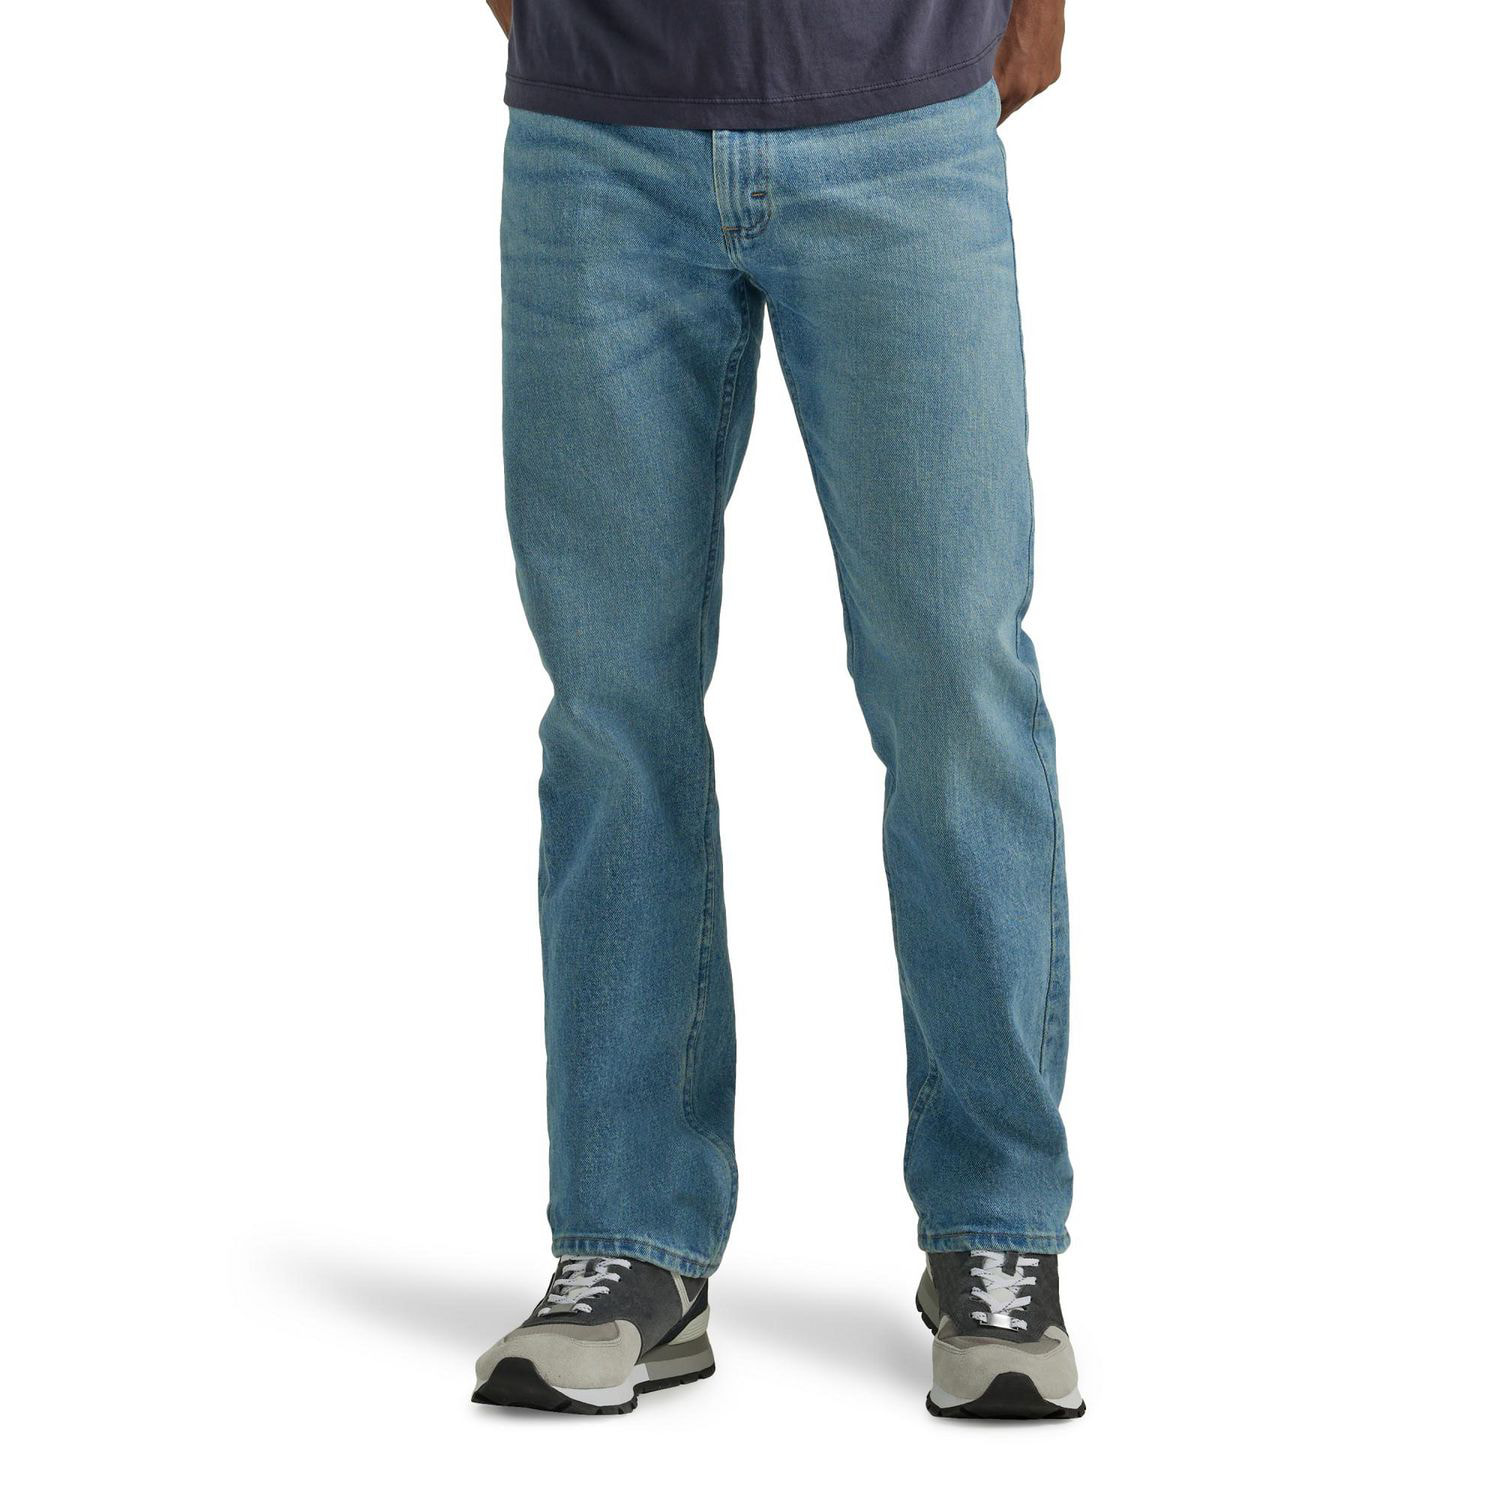 Wrangler Men's Five Star Regular Fit Jeans, Regular Fit